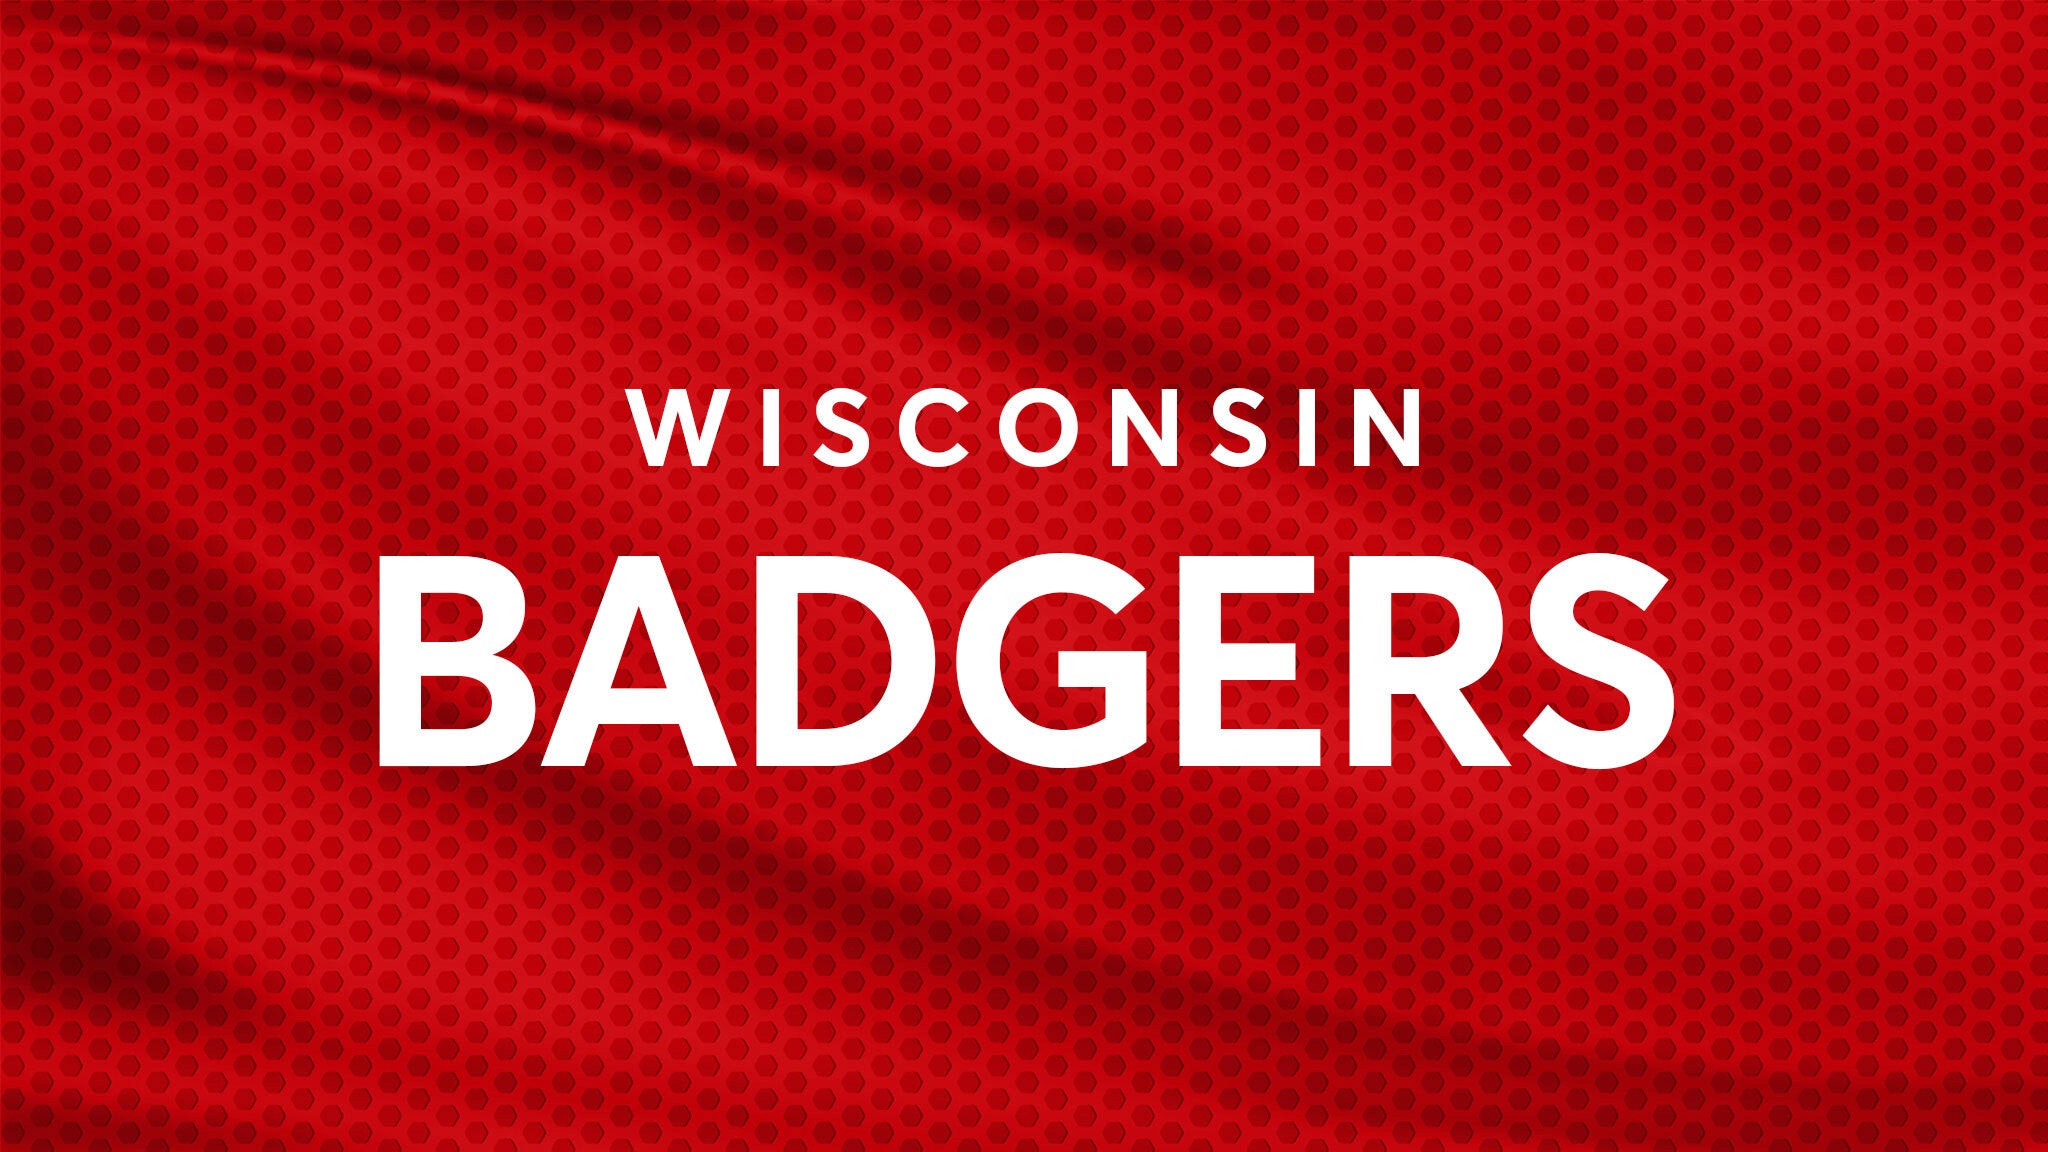 Wisconsin Badgers Football vs. Minnesota Gophers Football hero